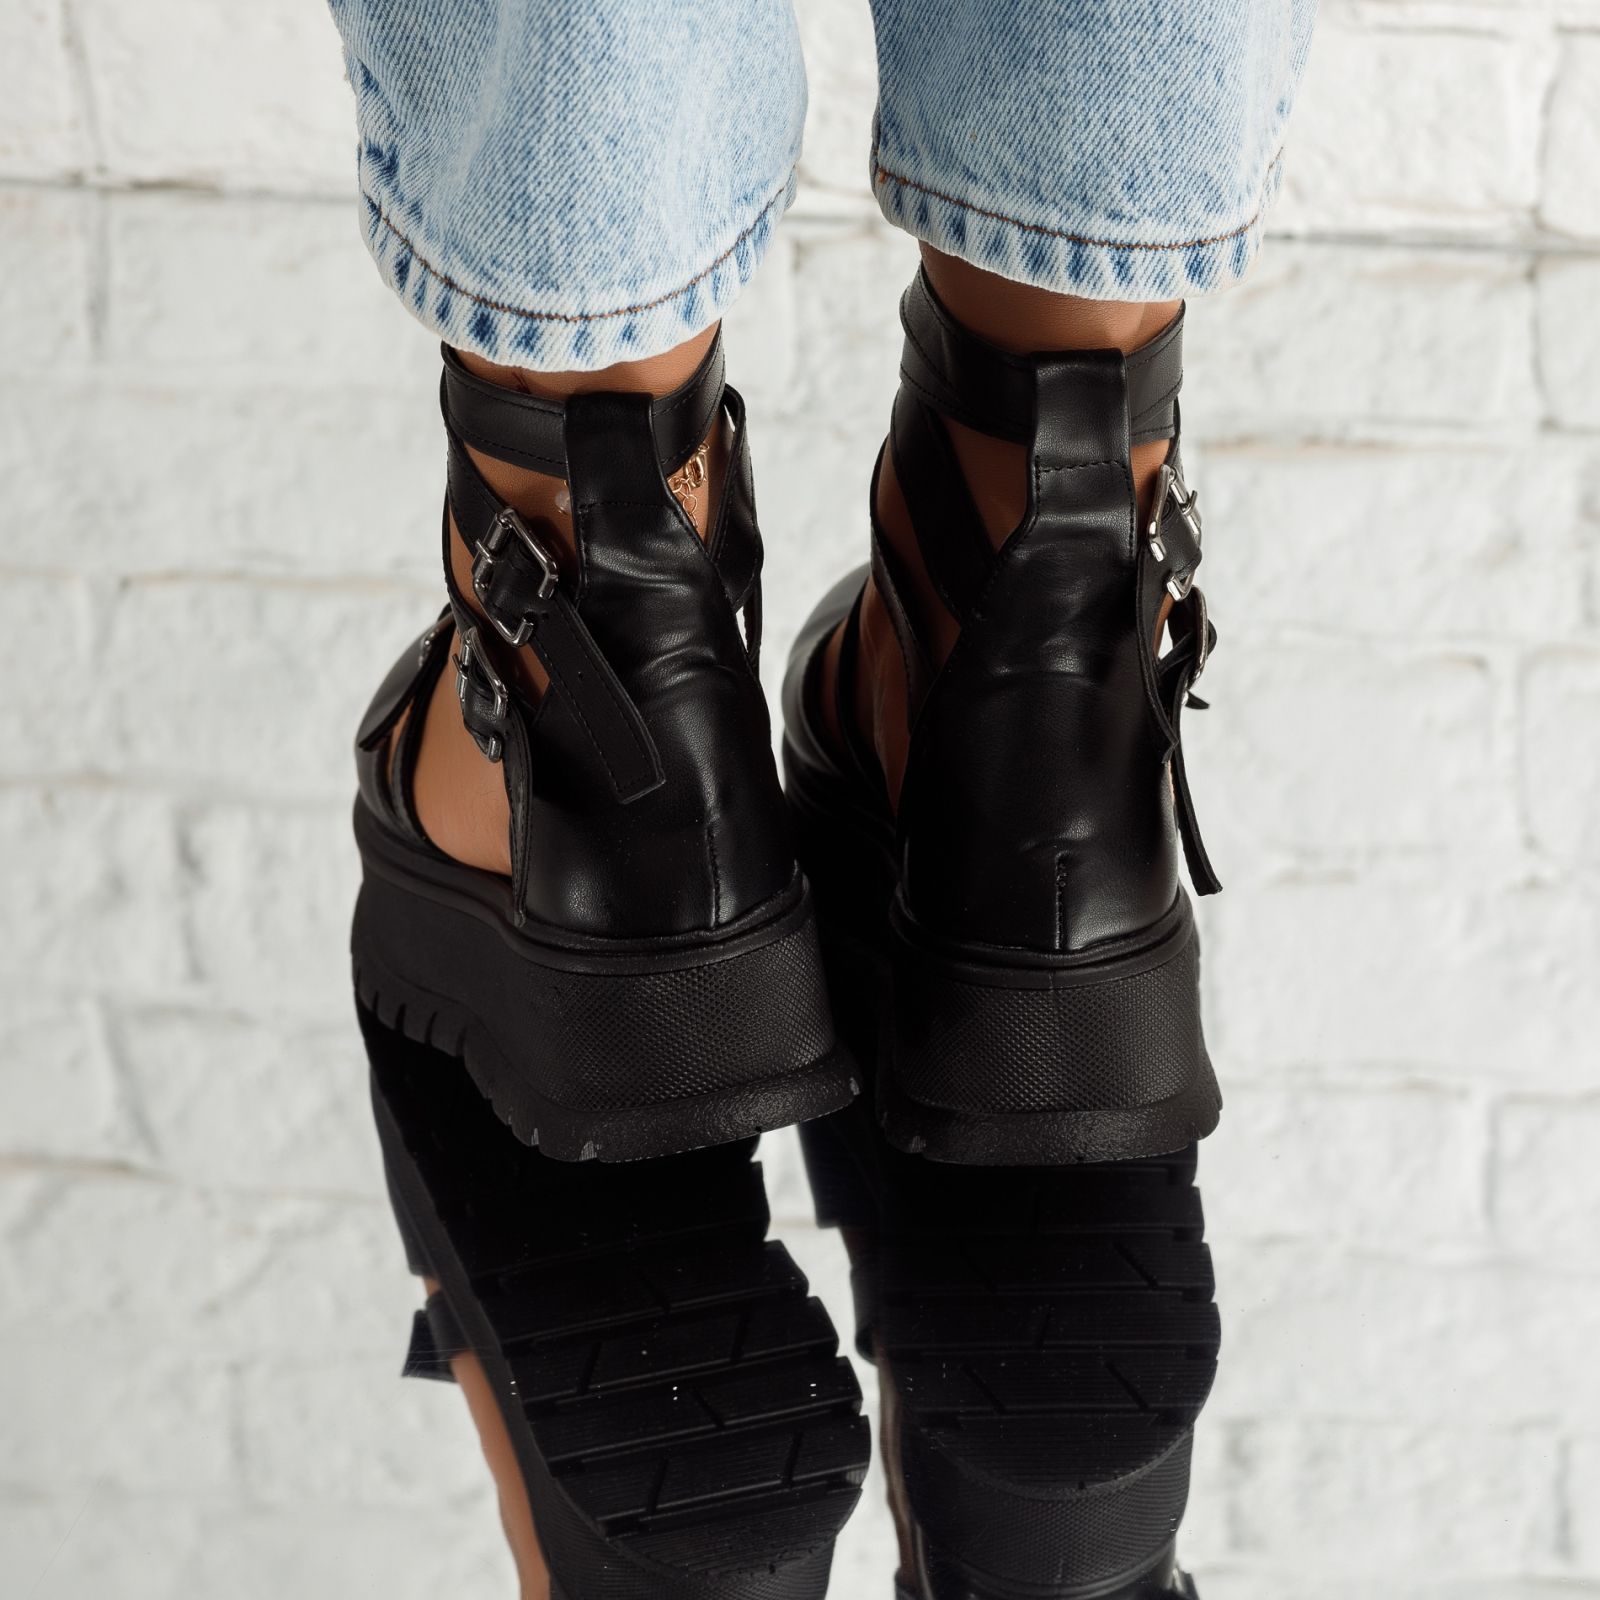 Alkalmi cipő fekete2 Luna #5074M